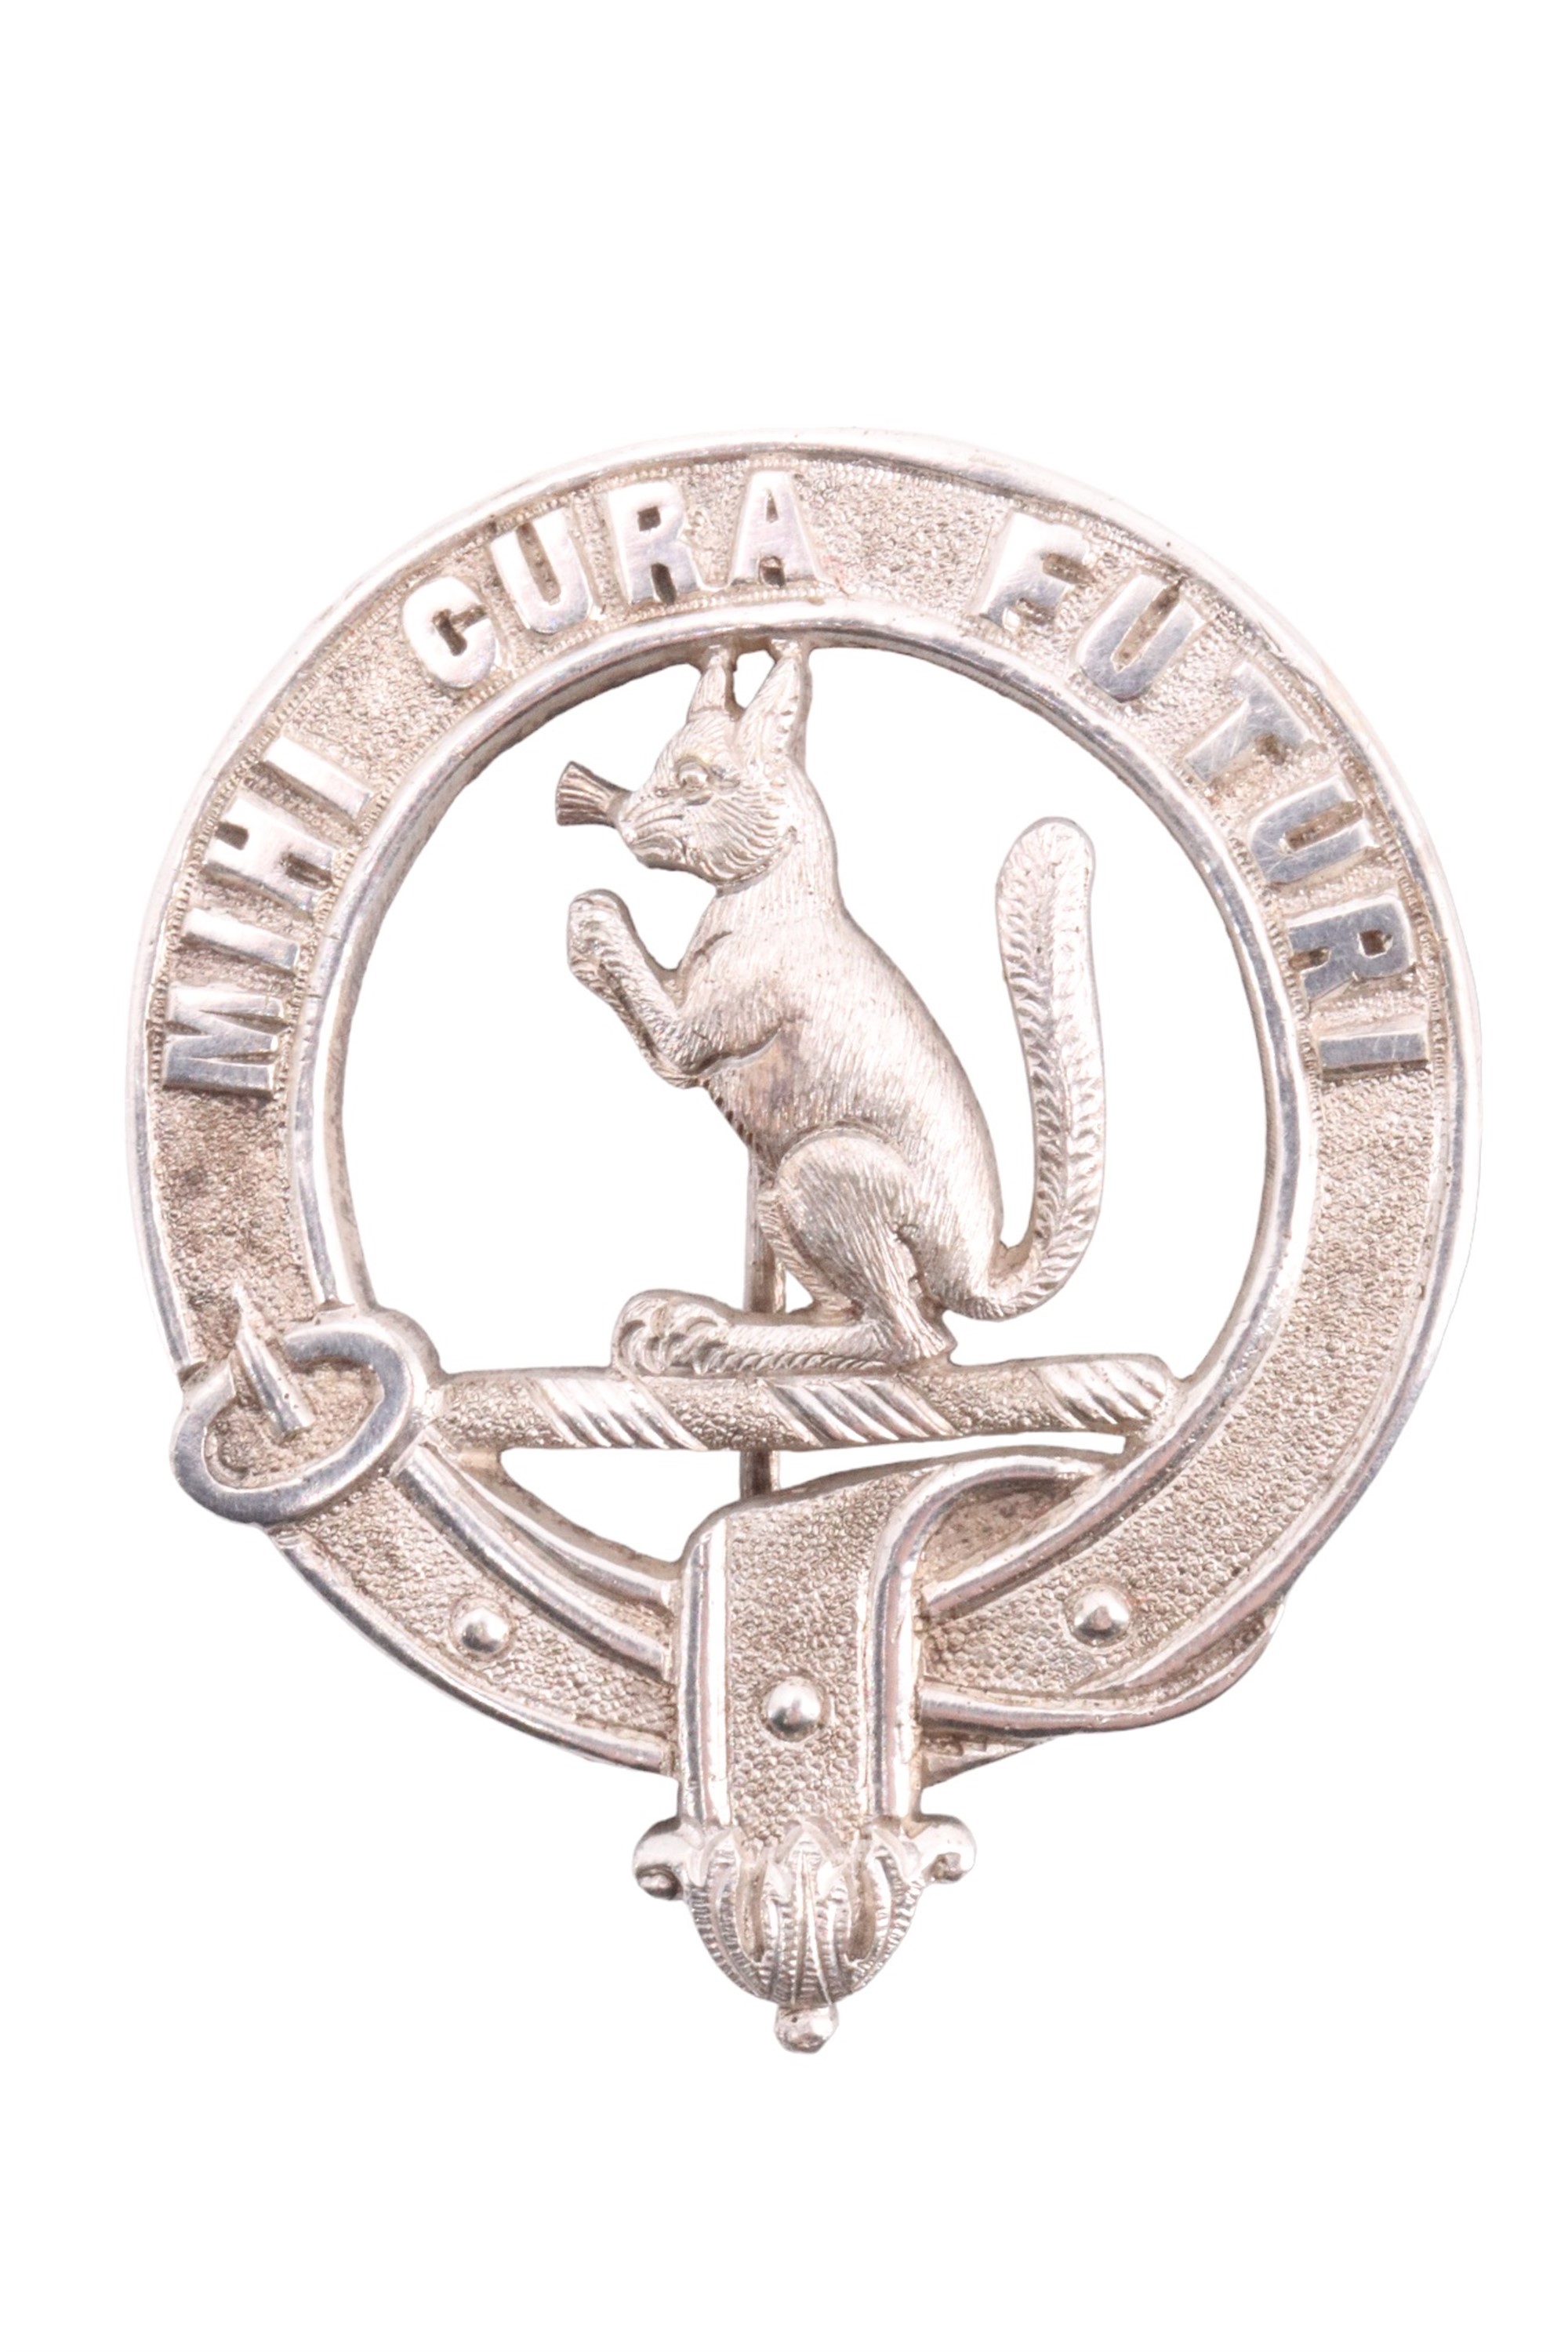 A Scottish clan brooch, 59 mm